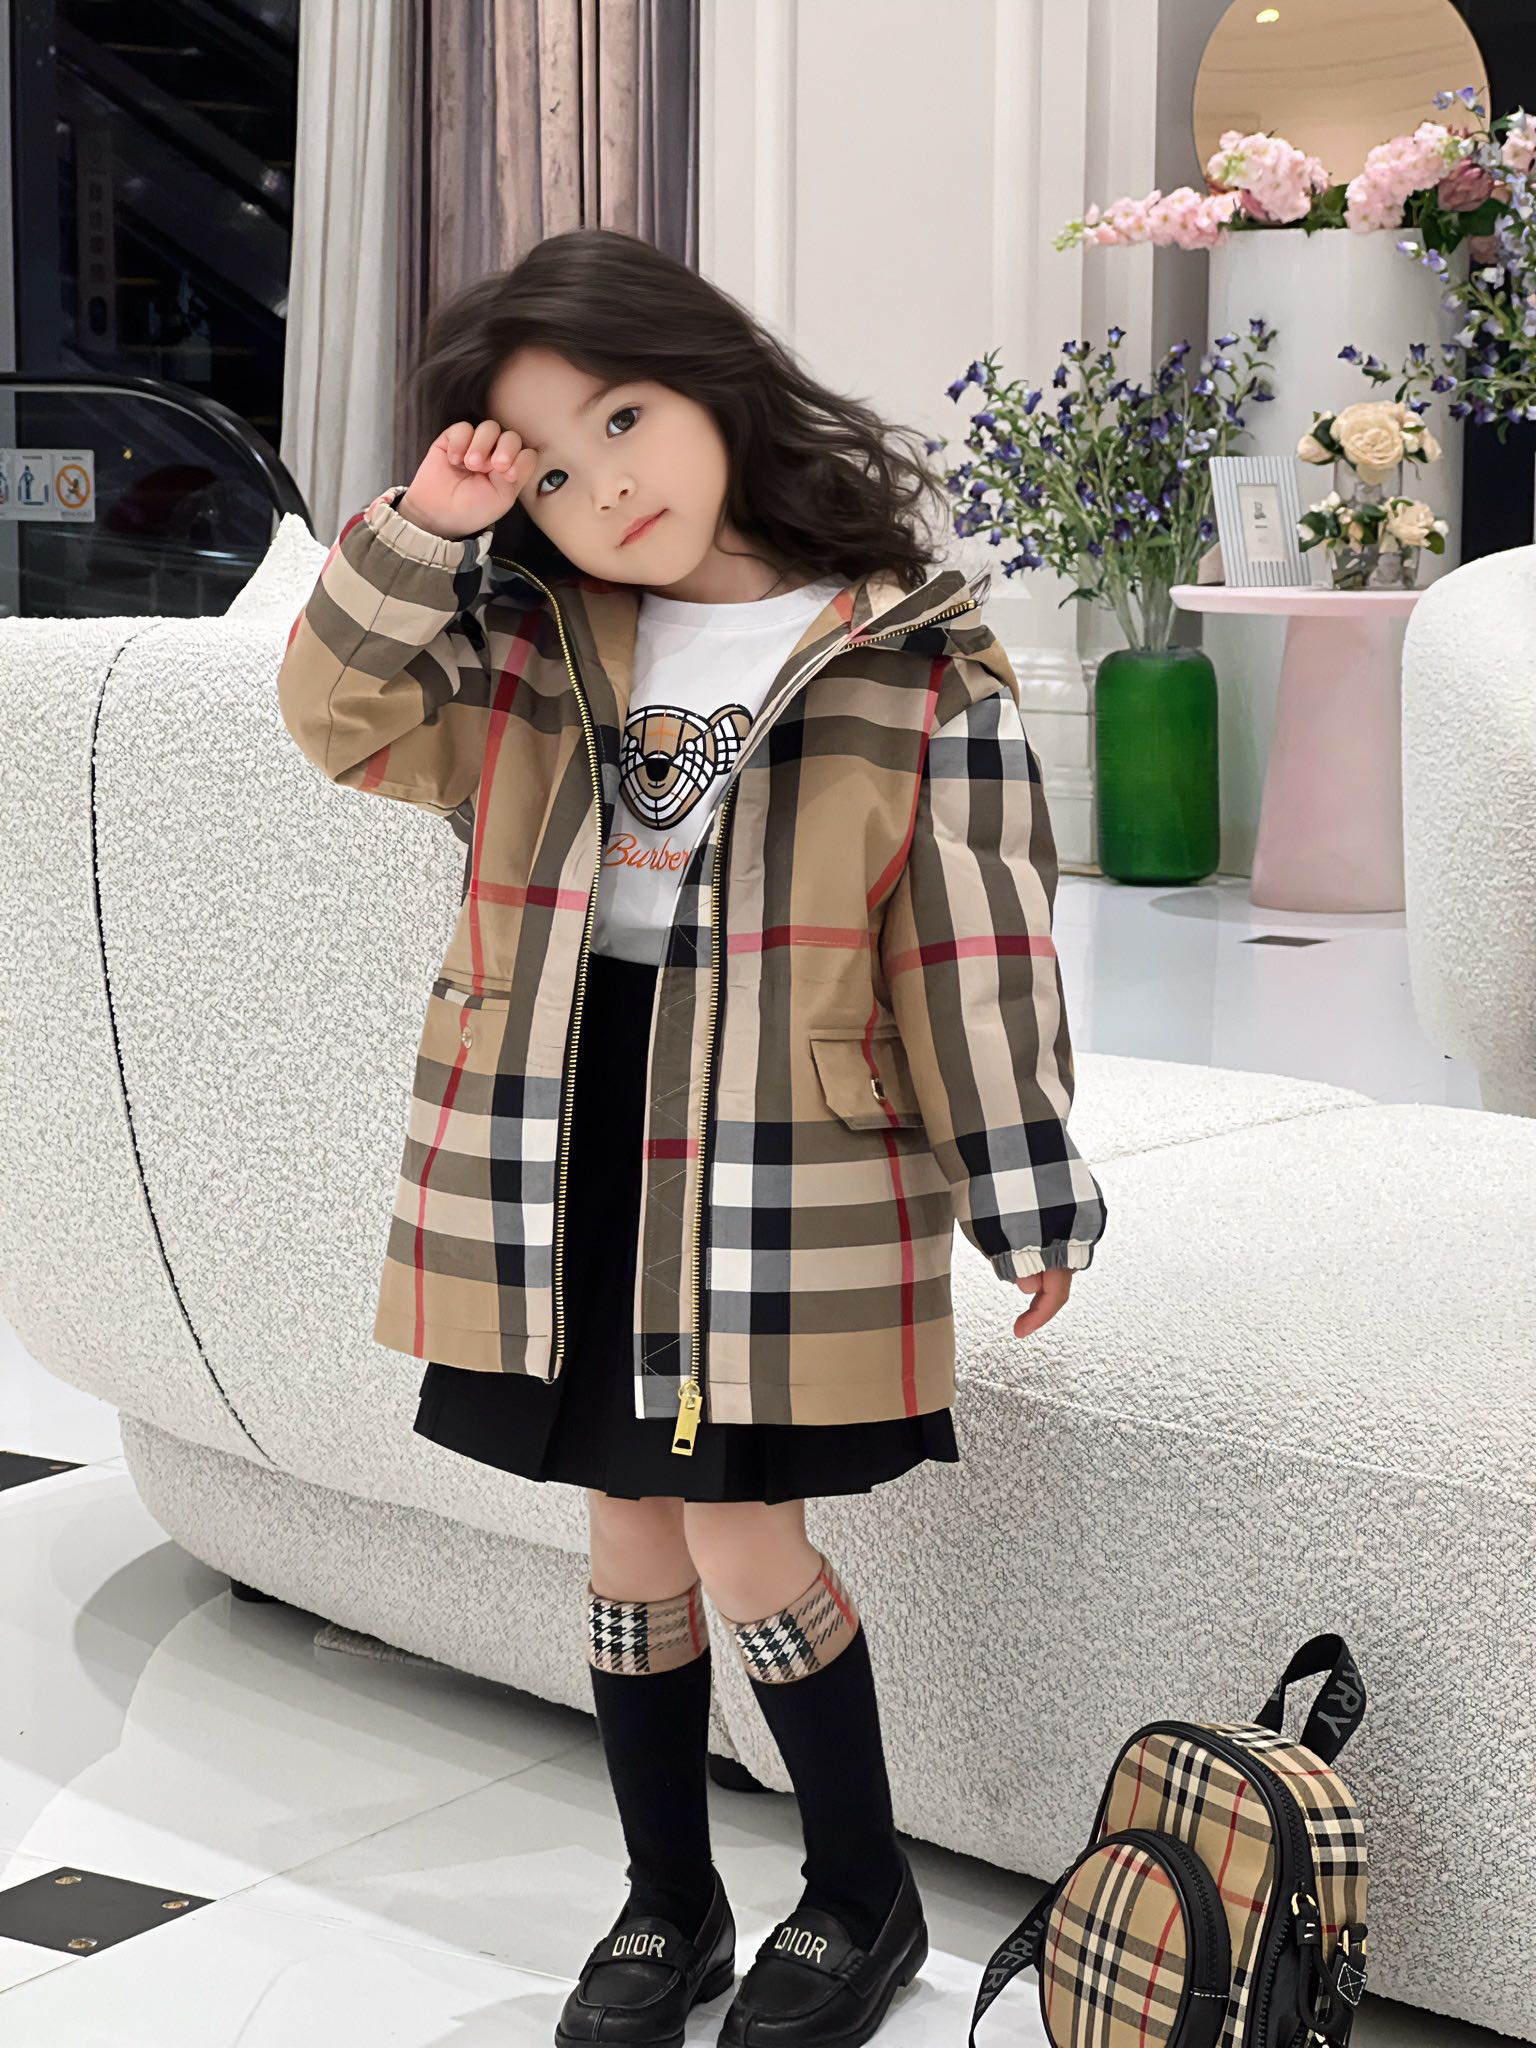 First Copy Clothing Windbreaker Replica Sale online Kids Girl Unisex Cotton Hooded Top